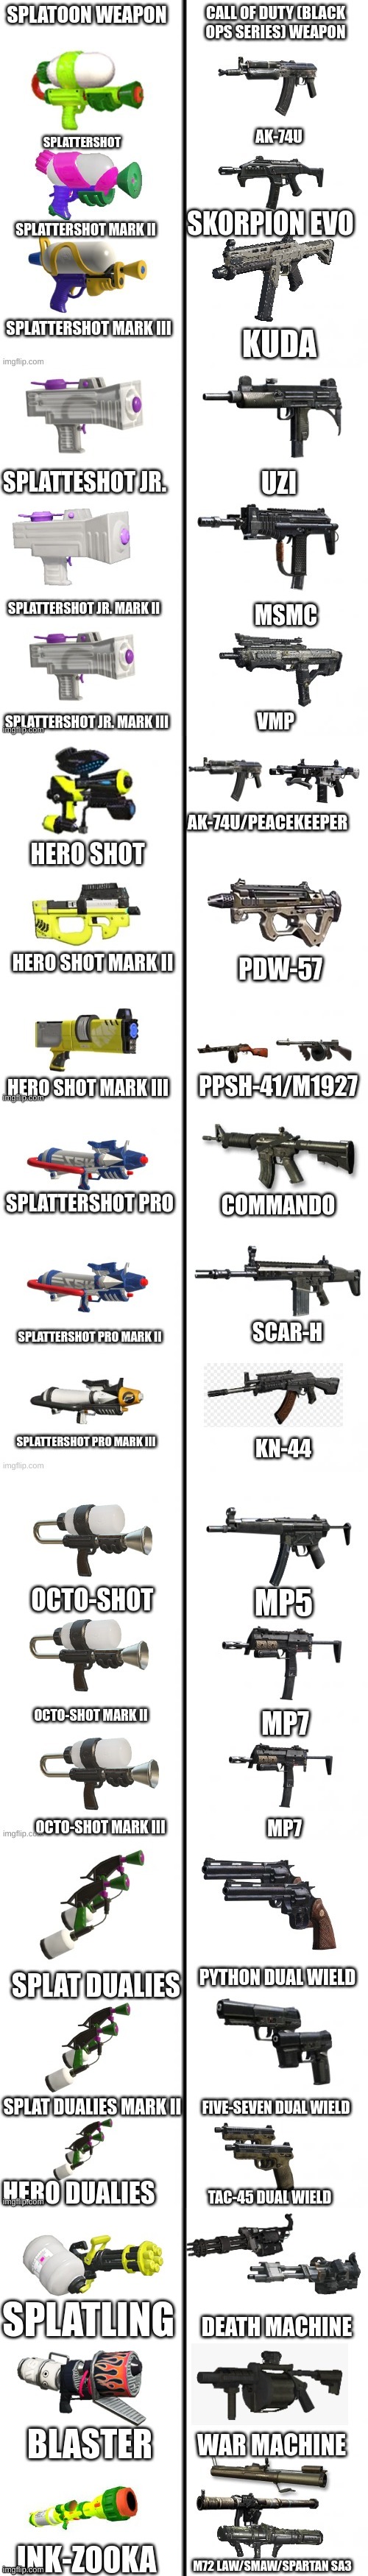 Splatoon Weapons as Black Ops Weapons | image tagged in splatoon 2 | made w/ Imgflip meme maker